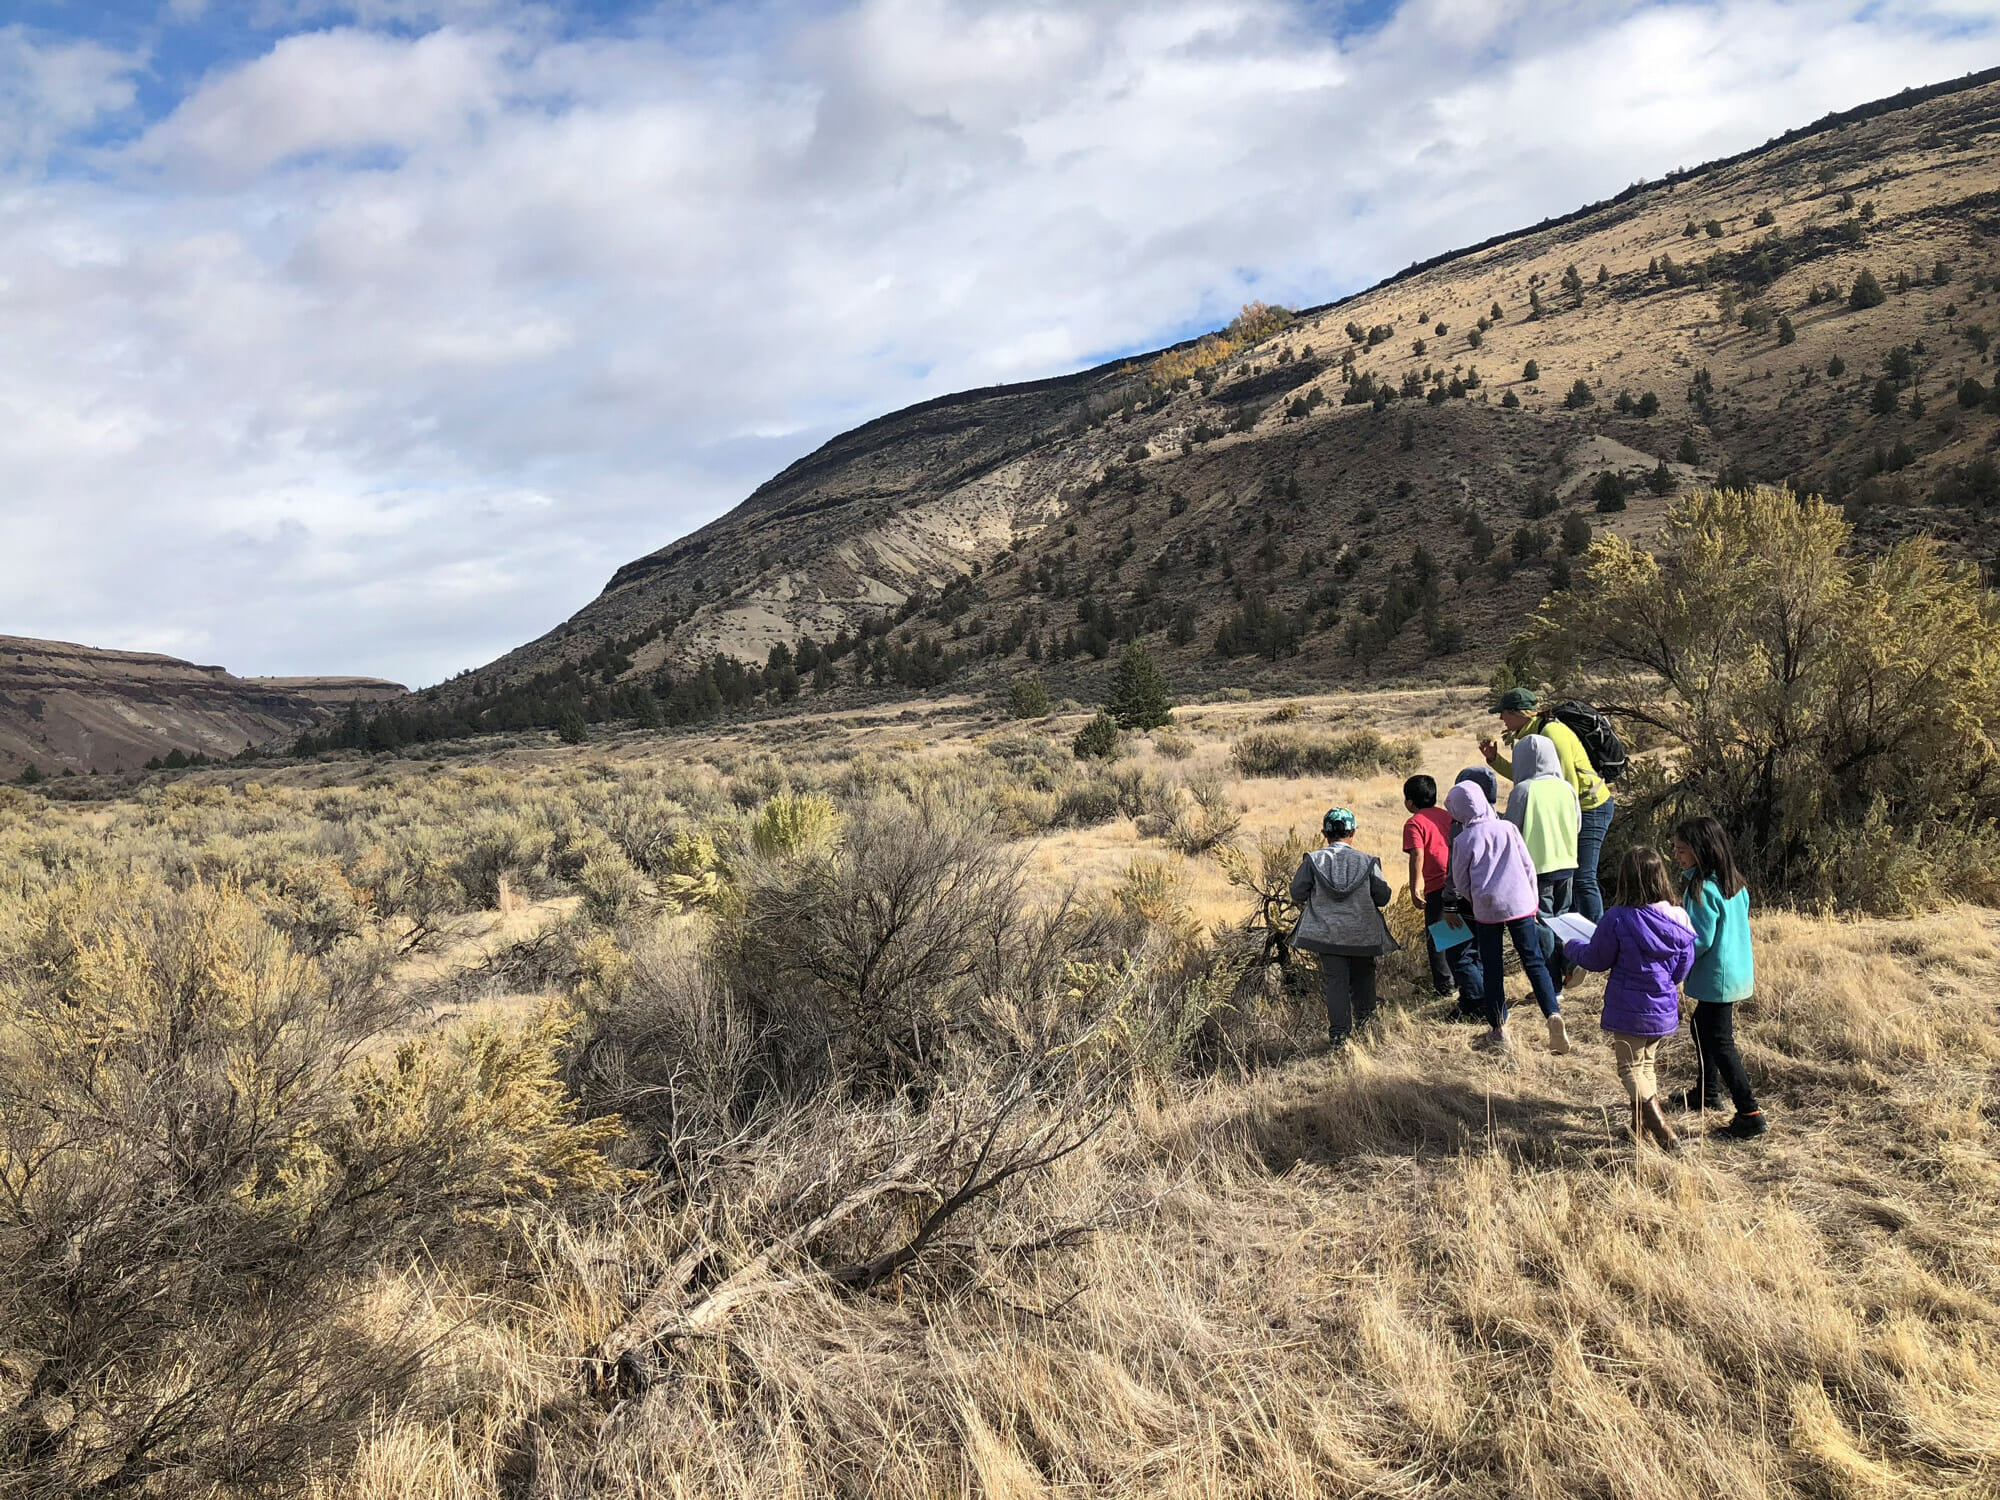 A teacher and seven 3rd graders walk through a dry landscape next to a mountain